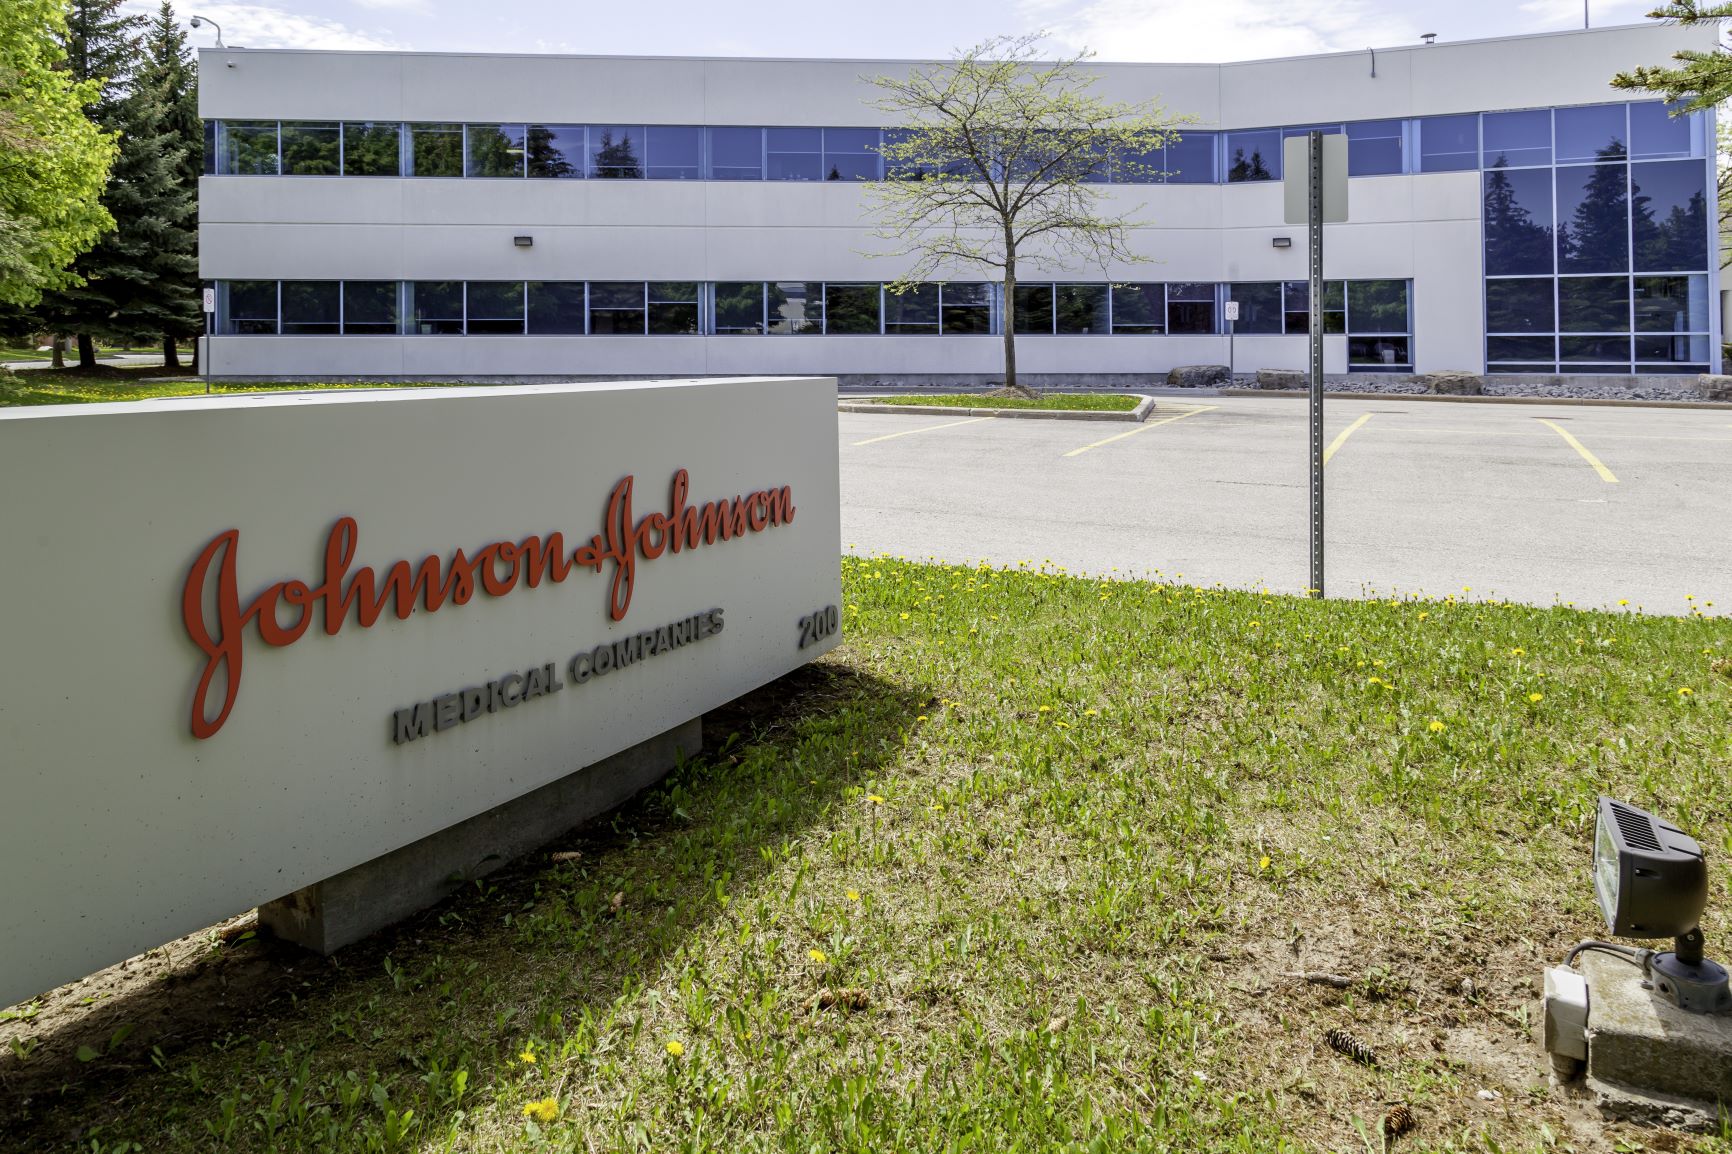 Stock of the day: Johnson & Johnson